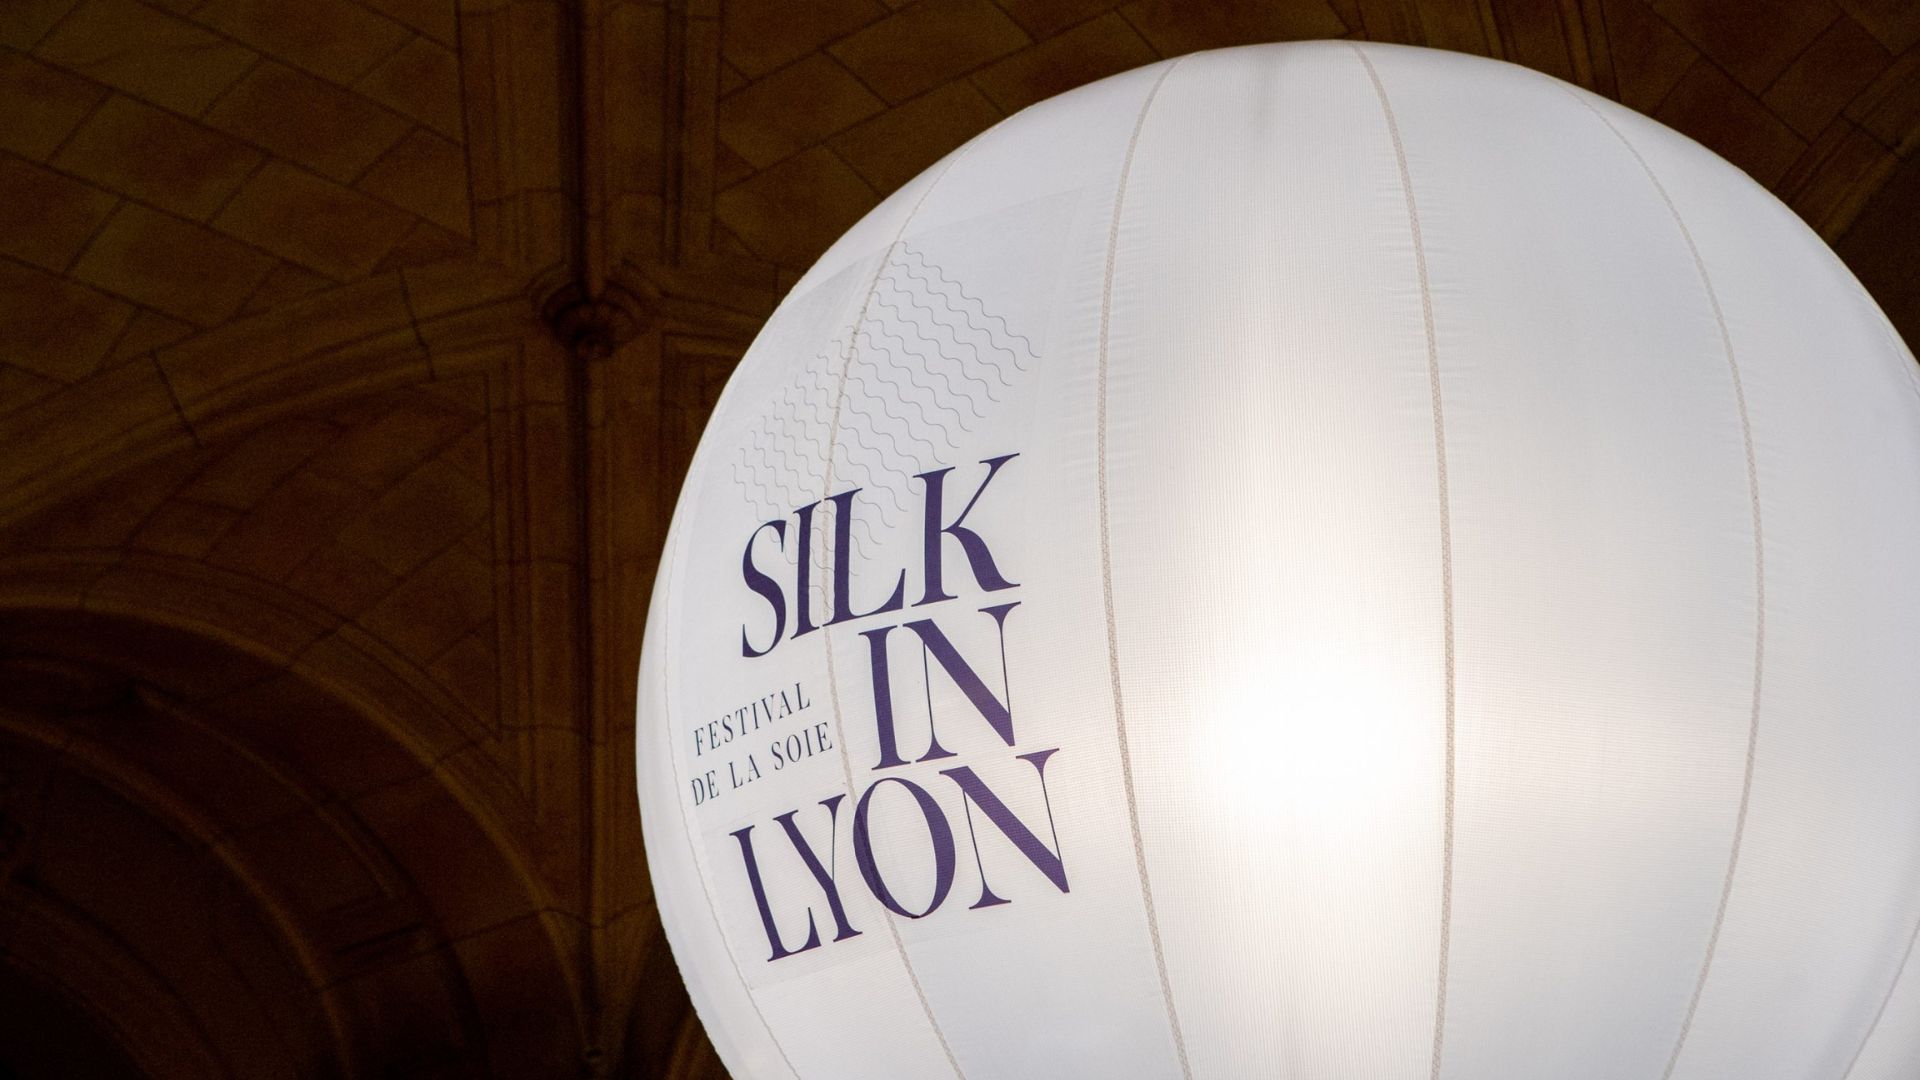 Silk in Lyon, festival de la soie - © Pierre-Aymeric Dillies